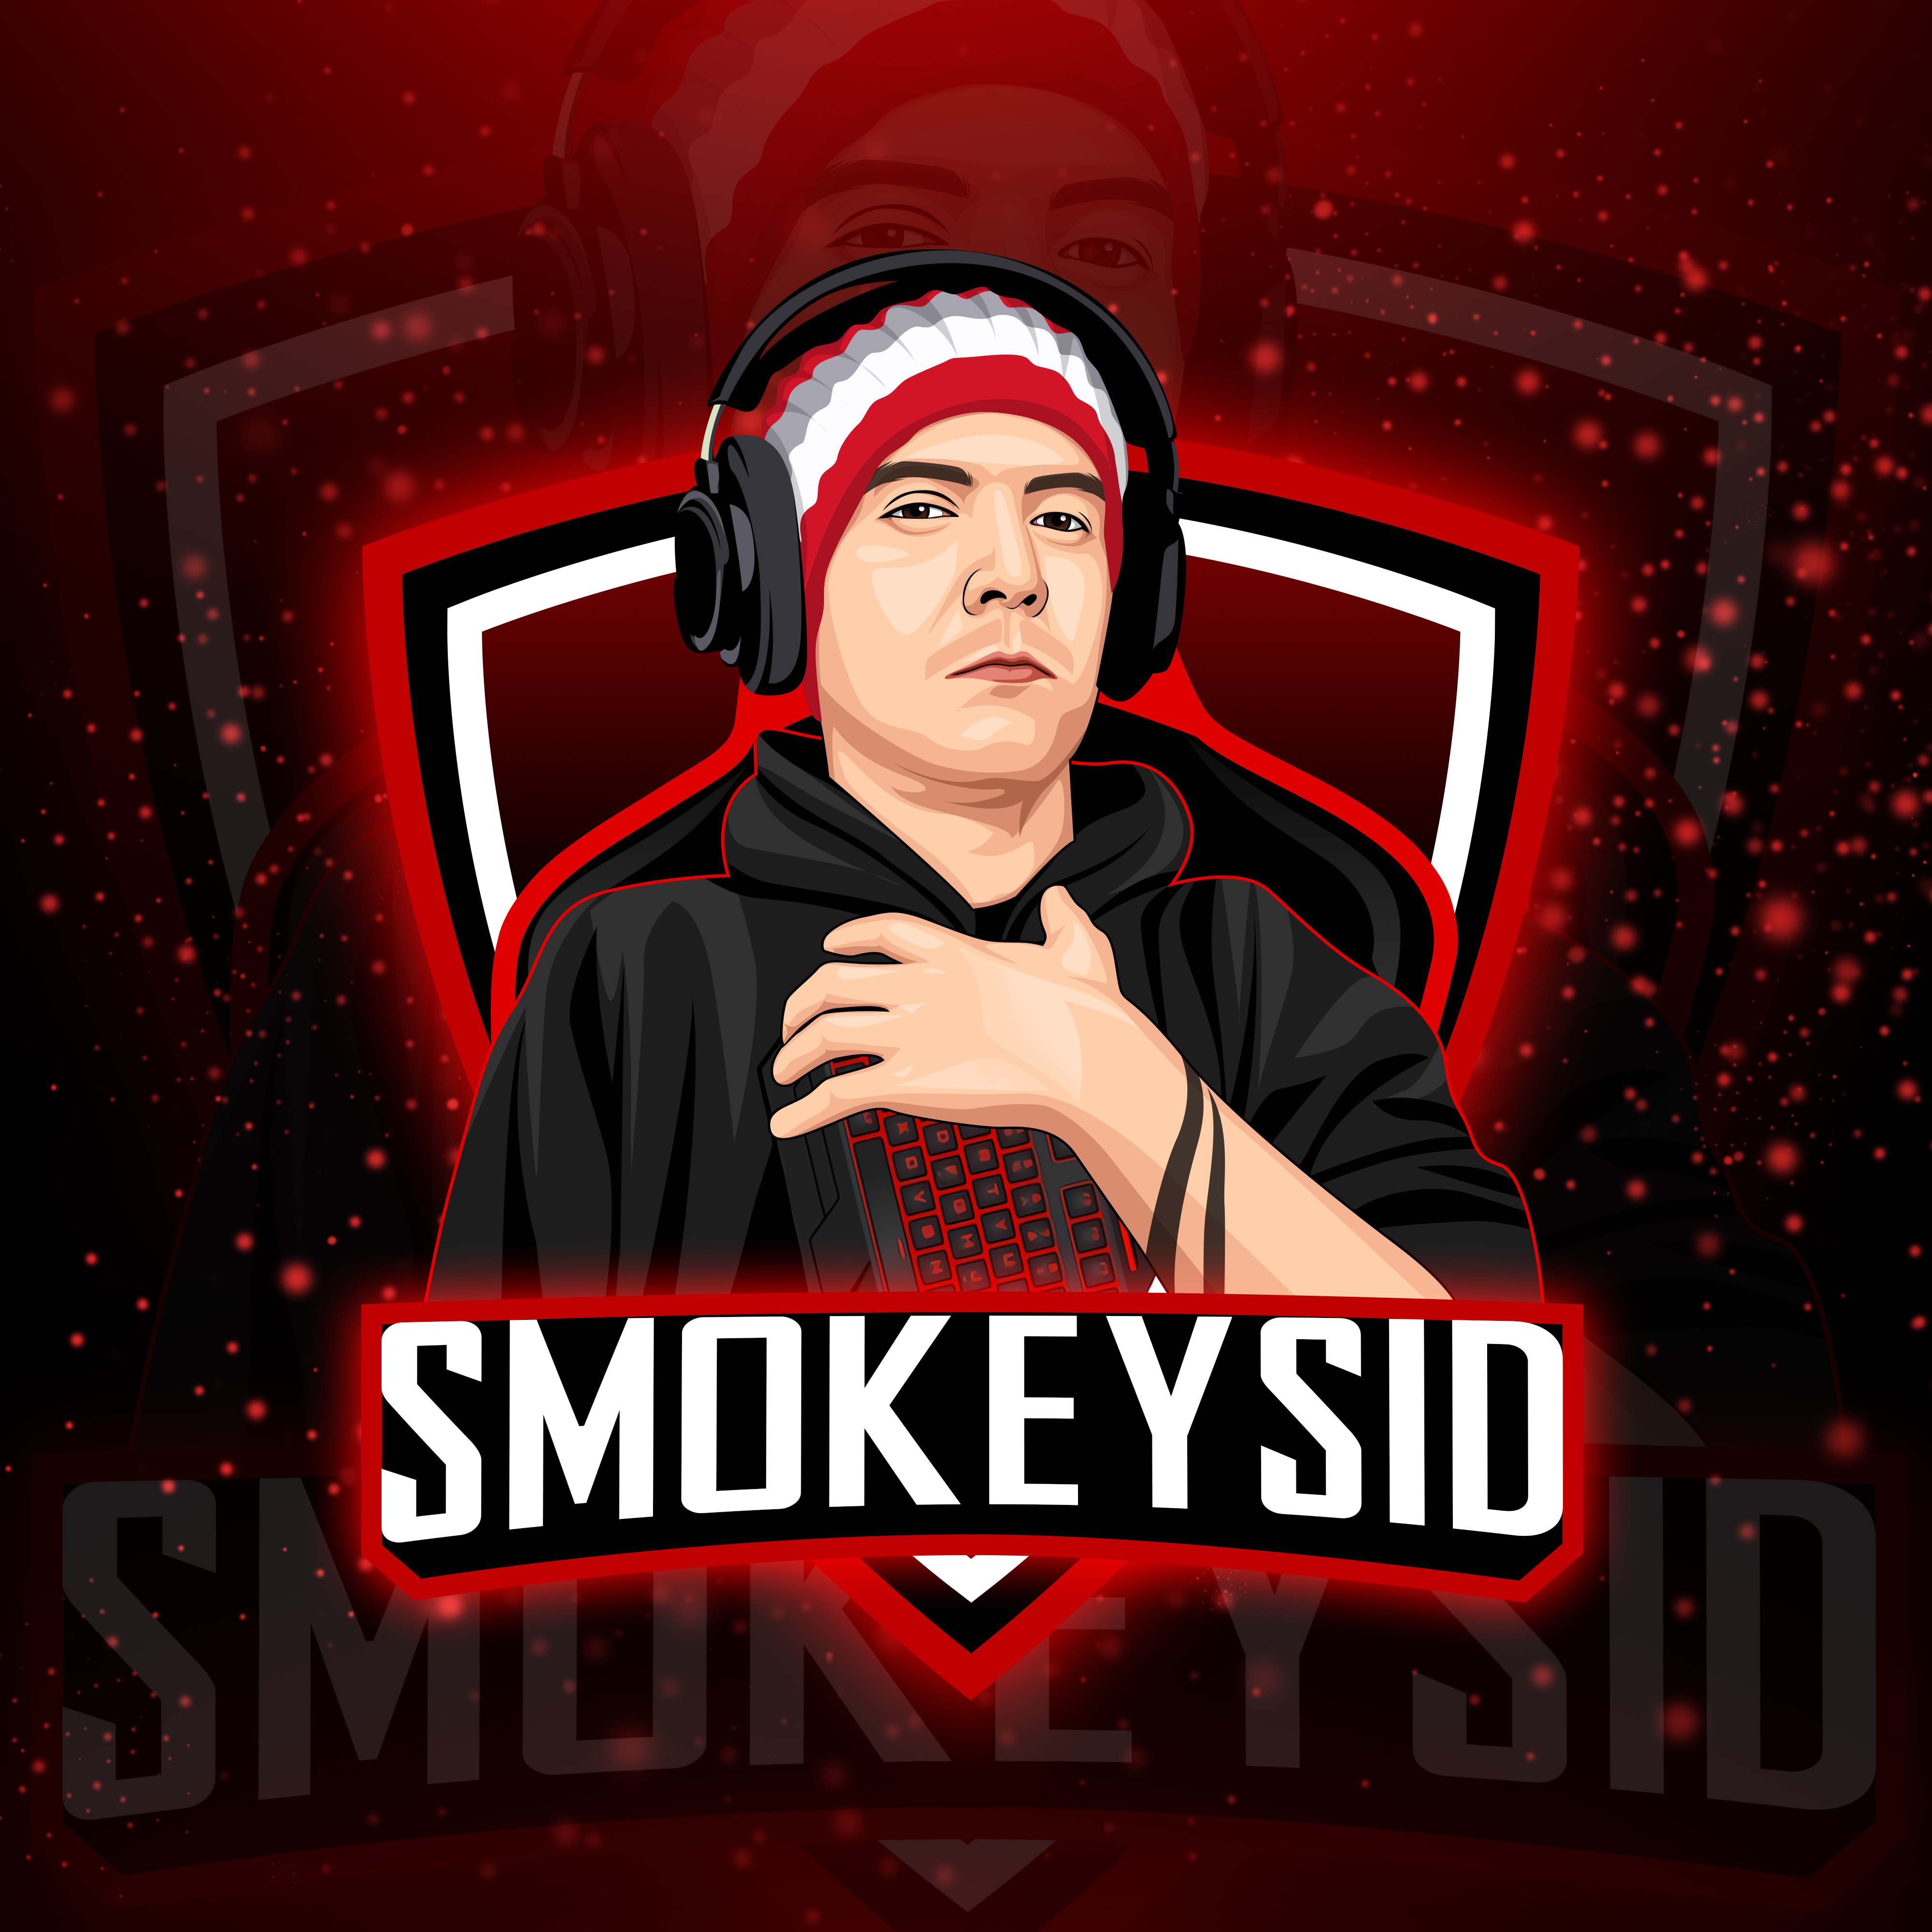 Smokeysid